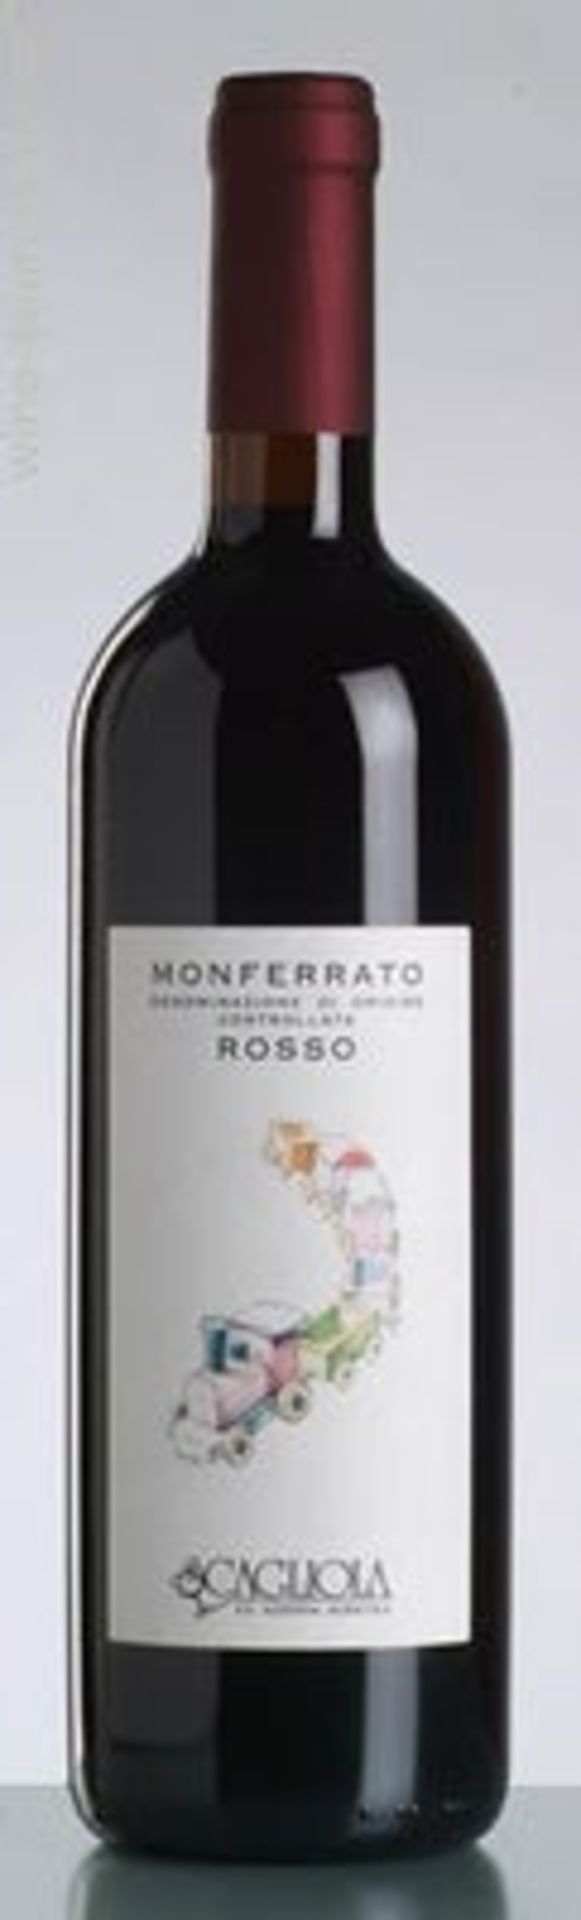 Monferrato Rosso Scajeta 2011 750ml ( Bid Is For 1x Bottle Option To Purchase More)